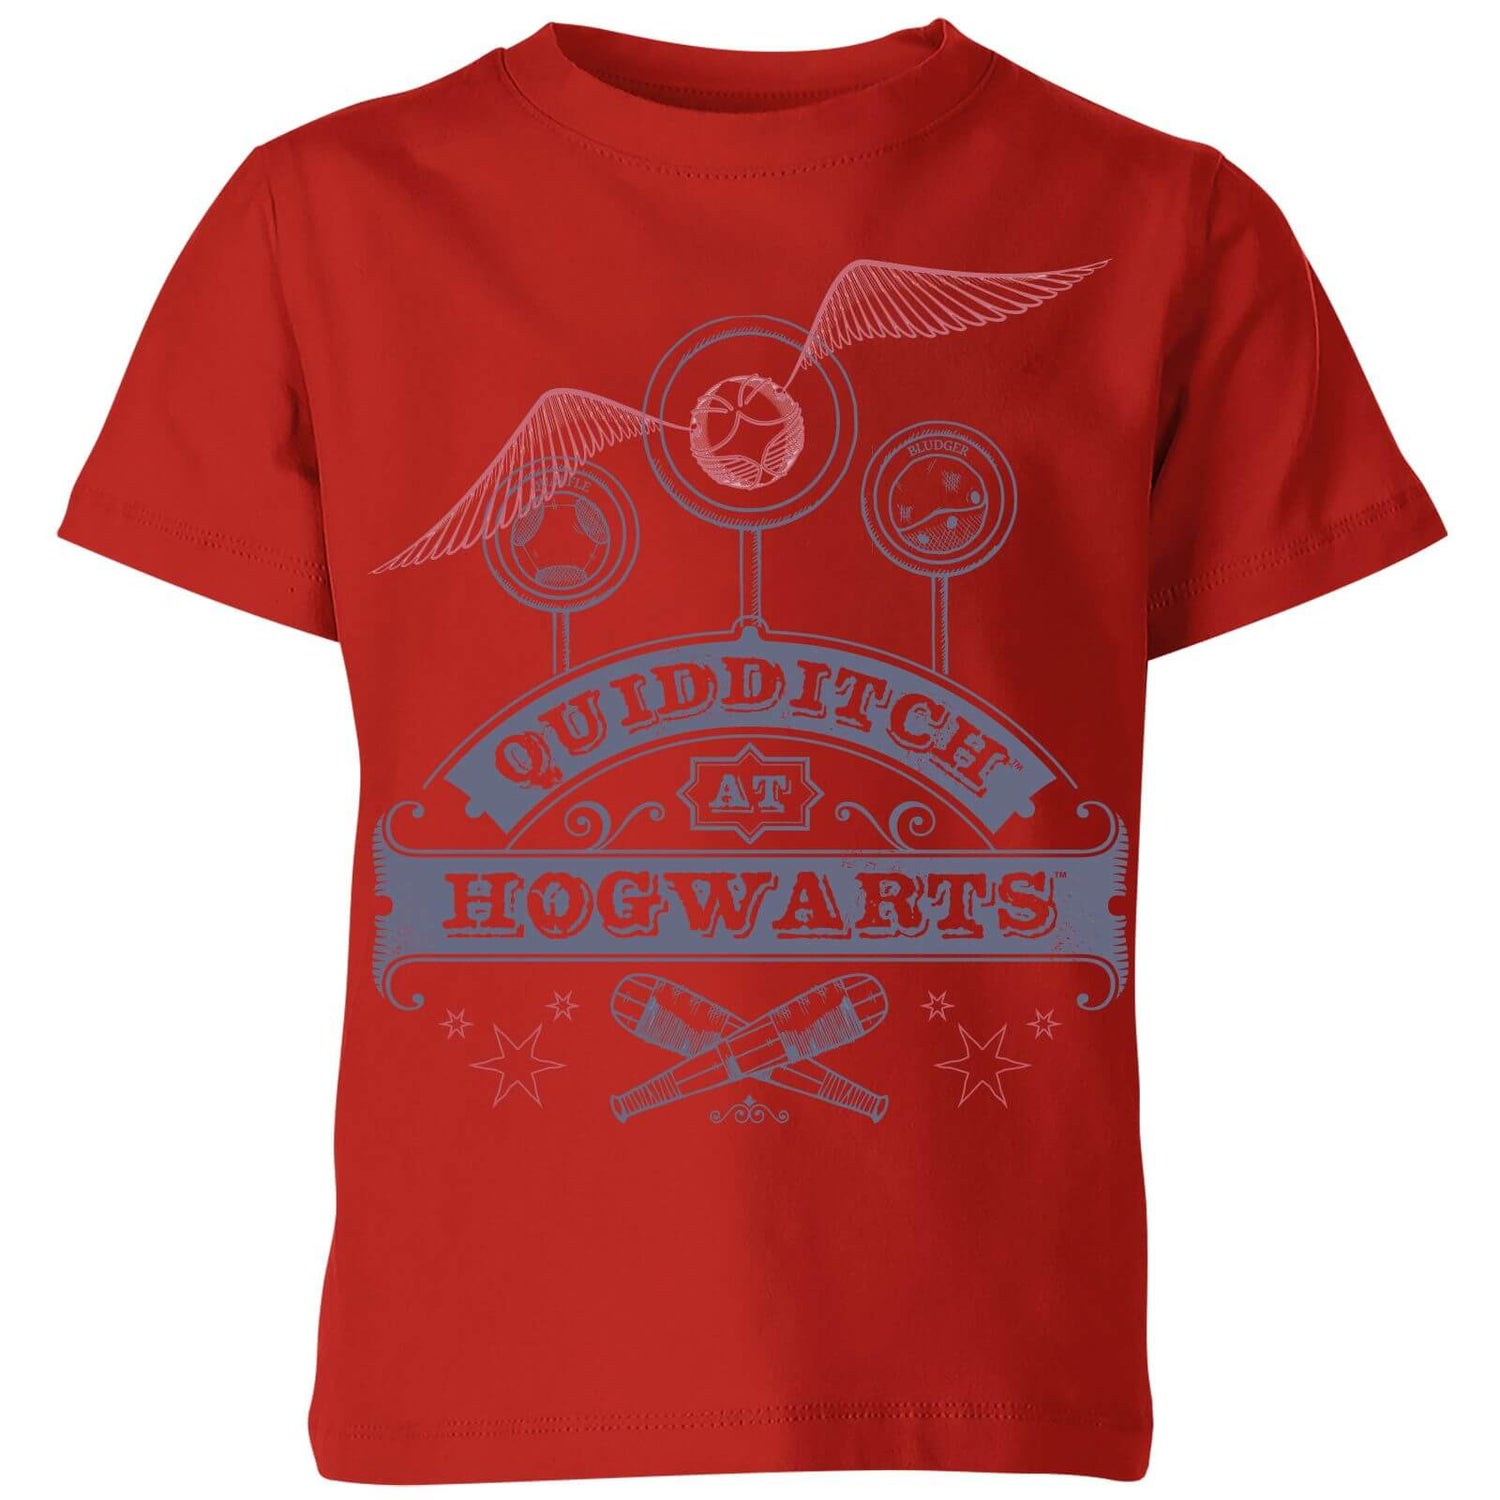 Harry Potter Quidditch At Hogwarts Kids' T-Shirt - Red